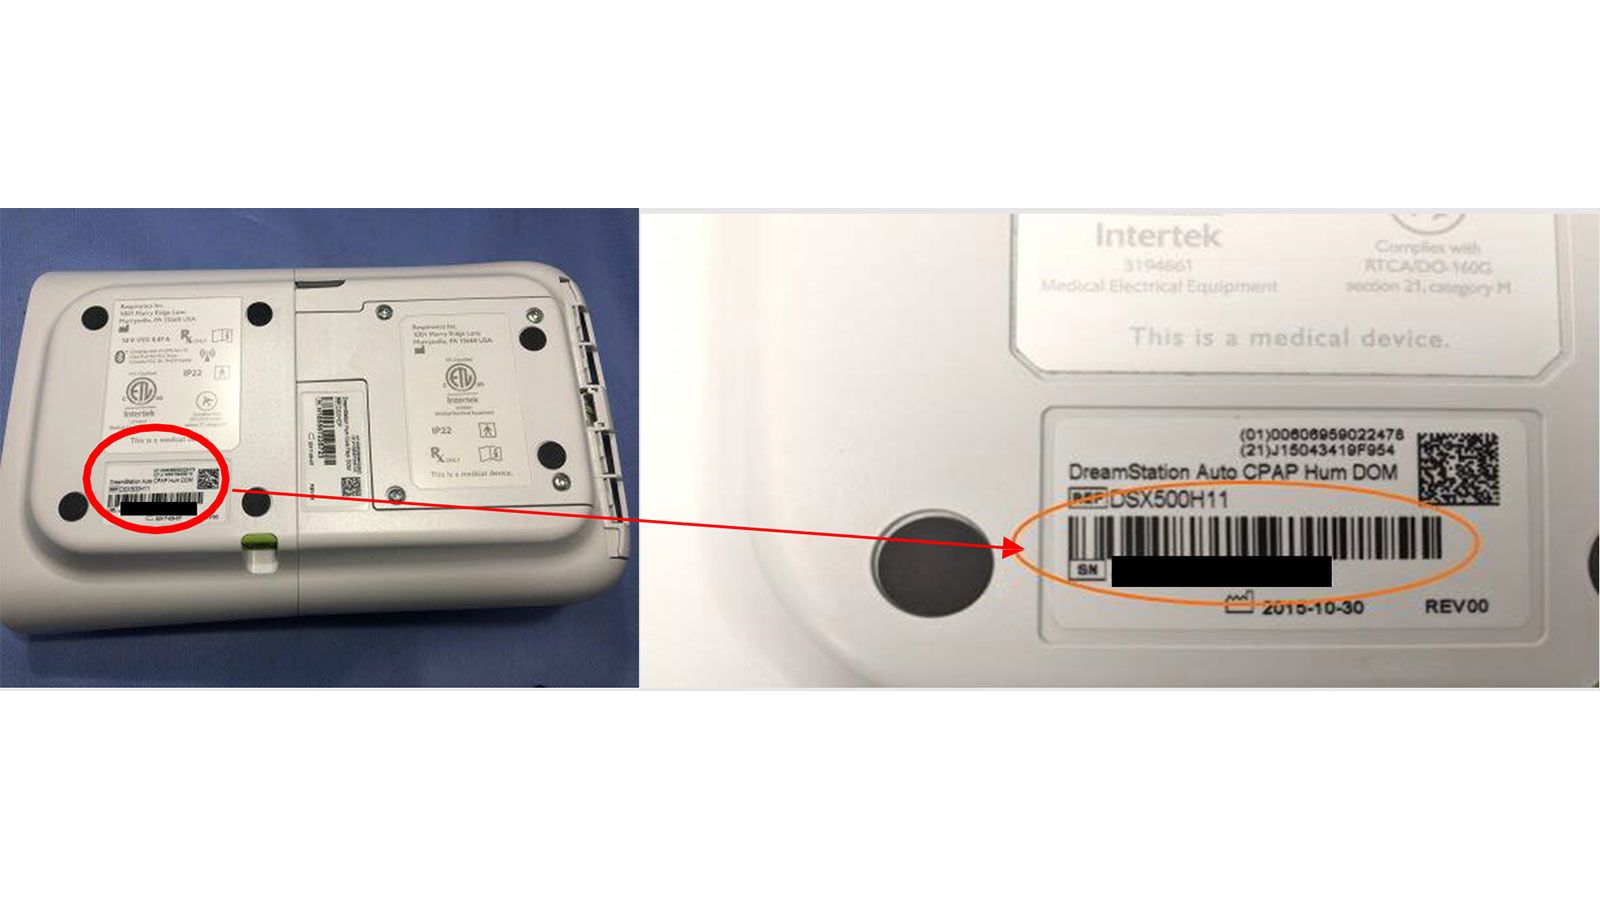 Wasserette ik ben trots Redelijk Some Philips CPAP, BiPAP machines may not work as intended, FDA says in  recall | CNN